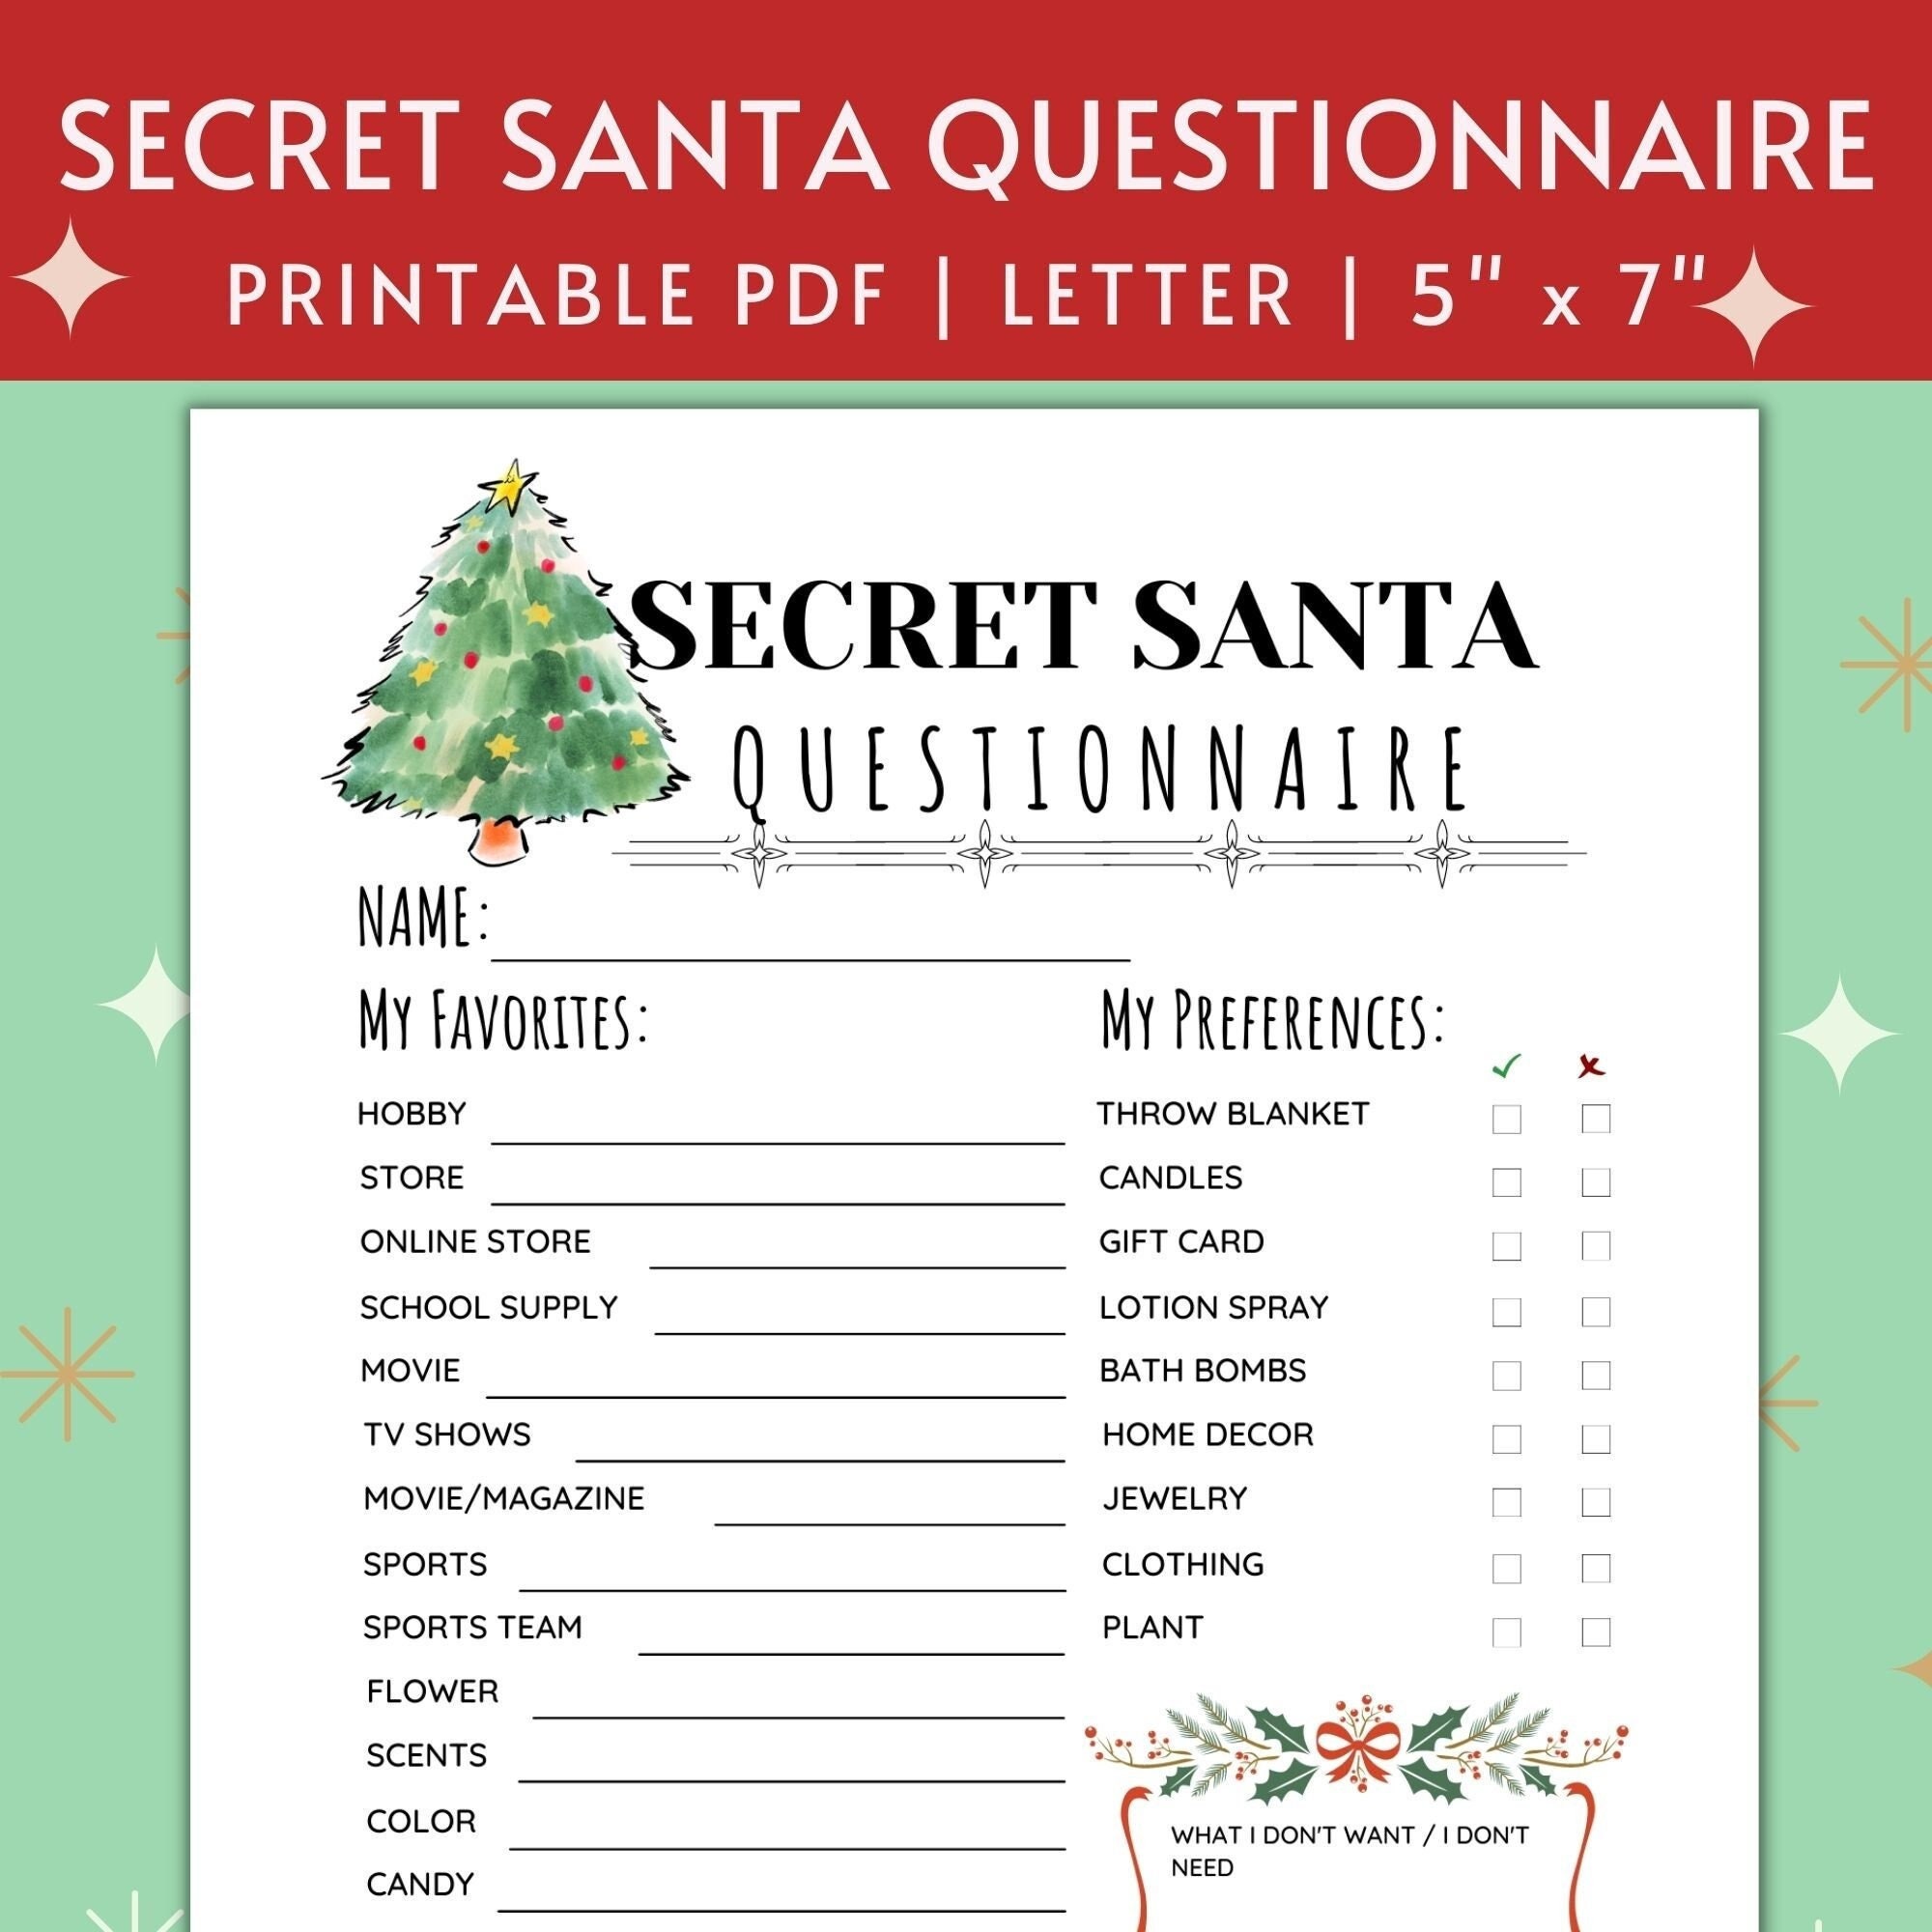 Secret Santa Questionnaire For Gift Exchange Printable Ubicaciondepersonas cdmx gob mx